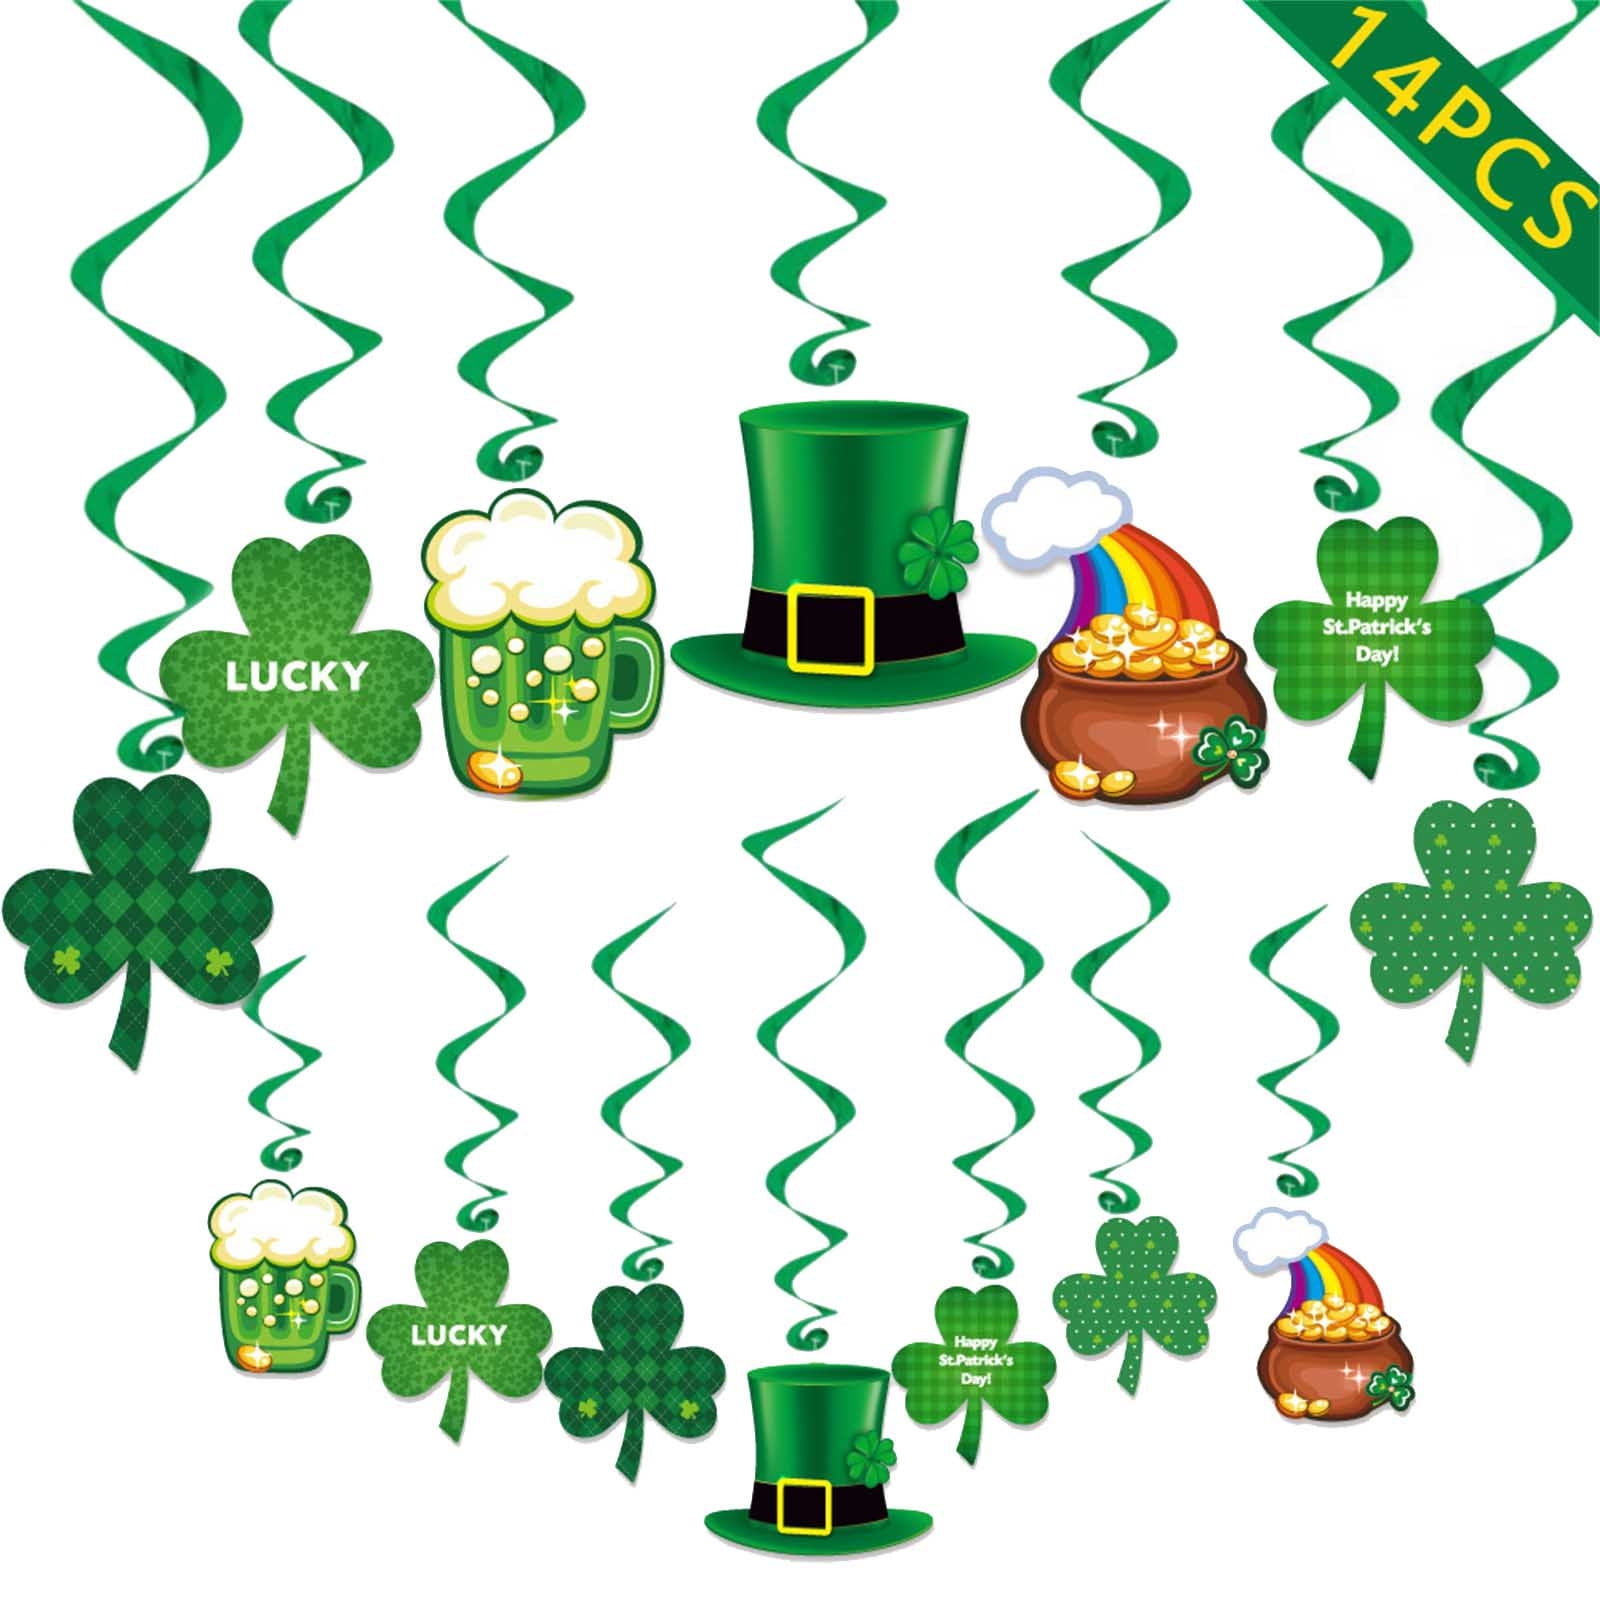 Irish Slainte Paddle - hand painted - Irish decor - home decor - St.  Patrick's Day - Gaelic decor - Cheers sign